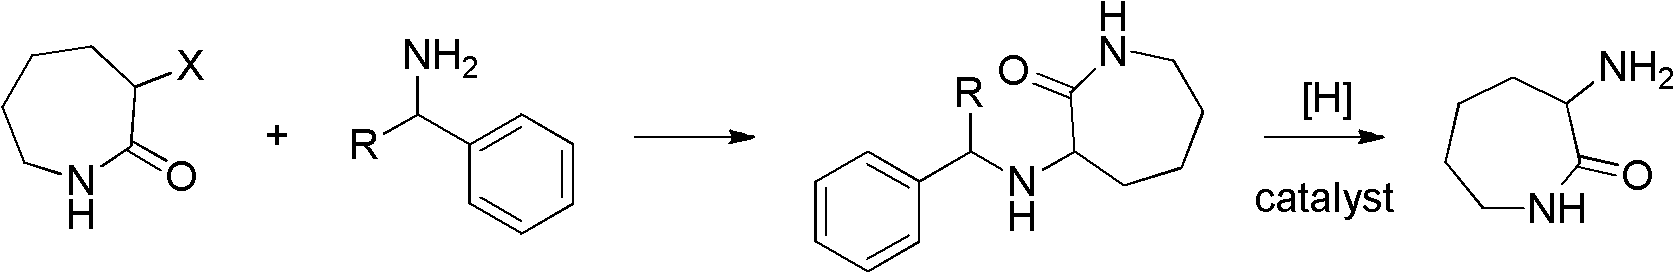 Method for synthesizing DL-alpha-amino caprolactam